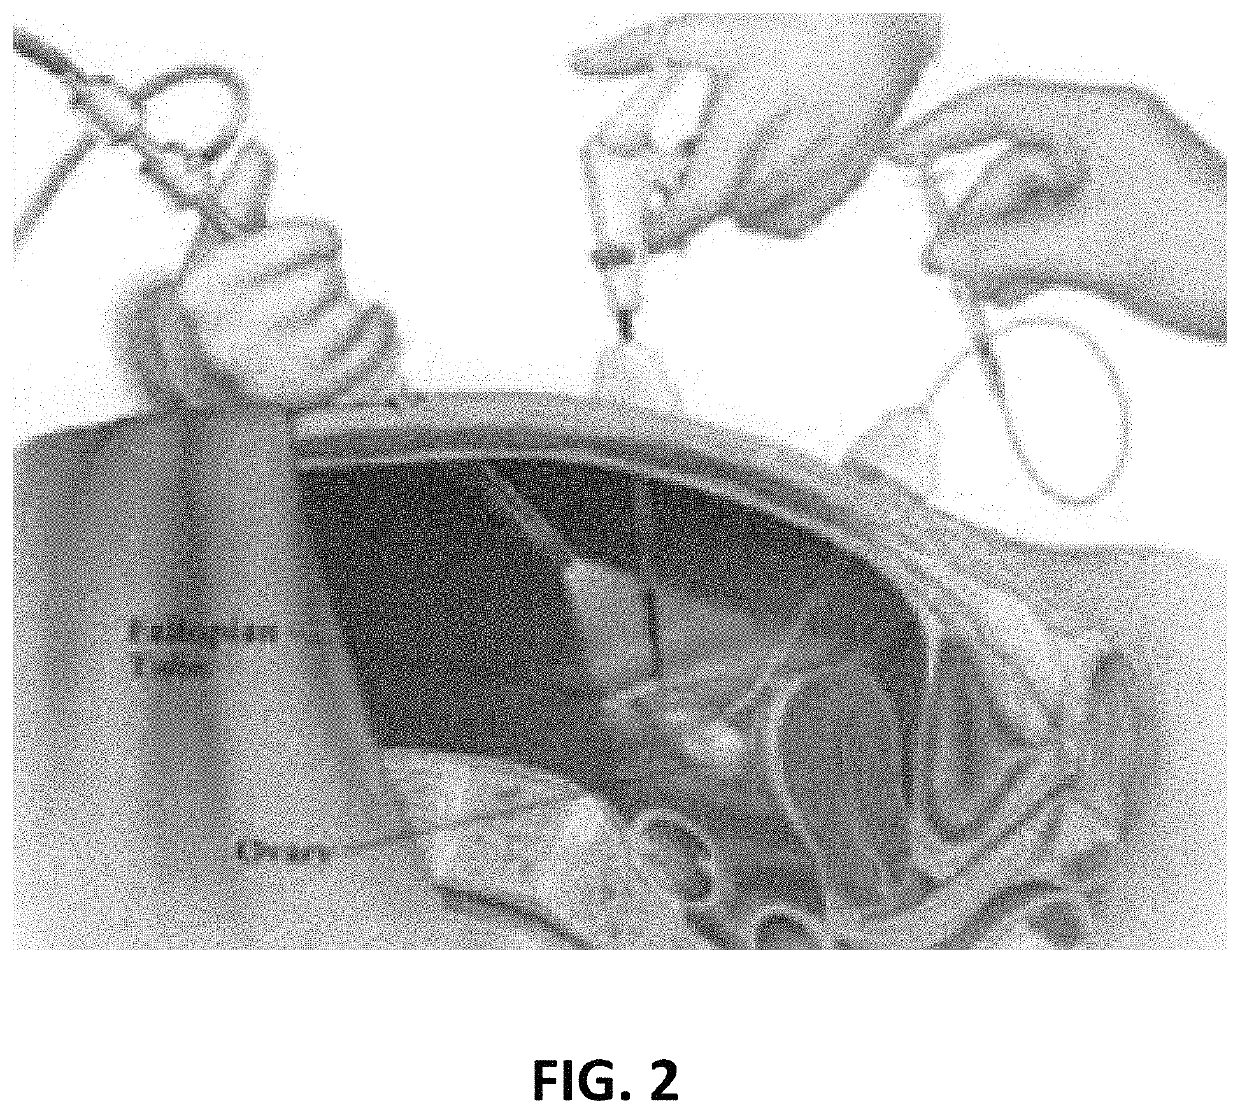 Catheter ultrasound transmission element (CUTE) catheter